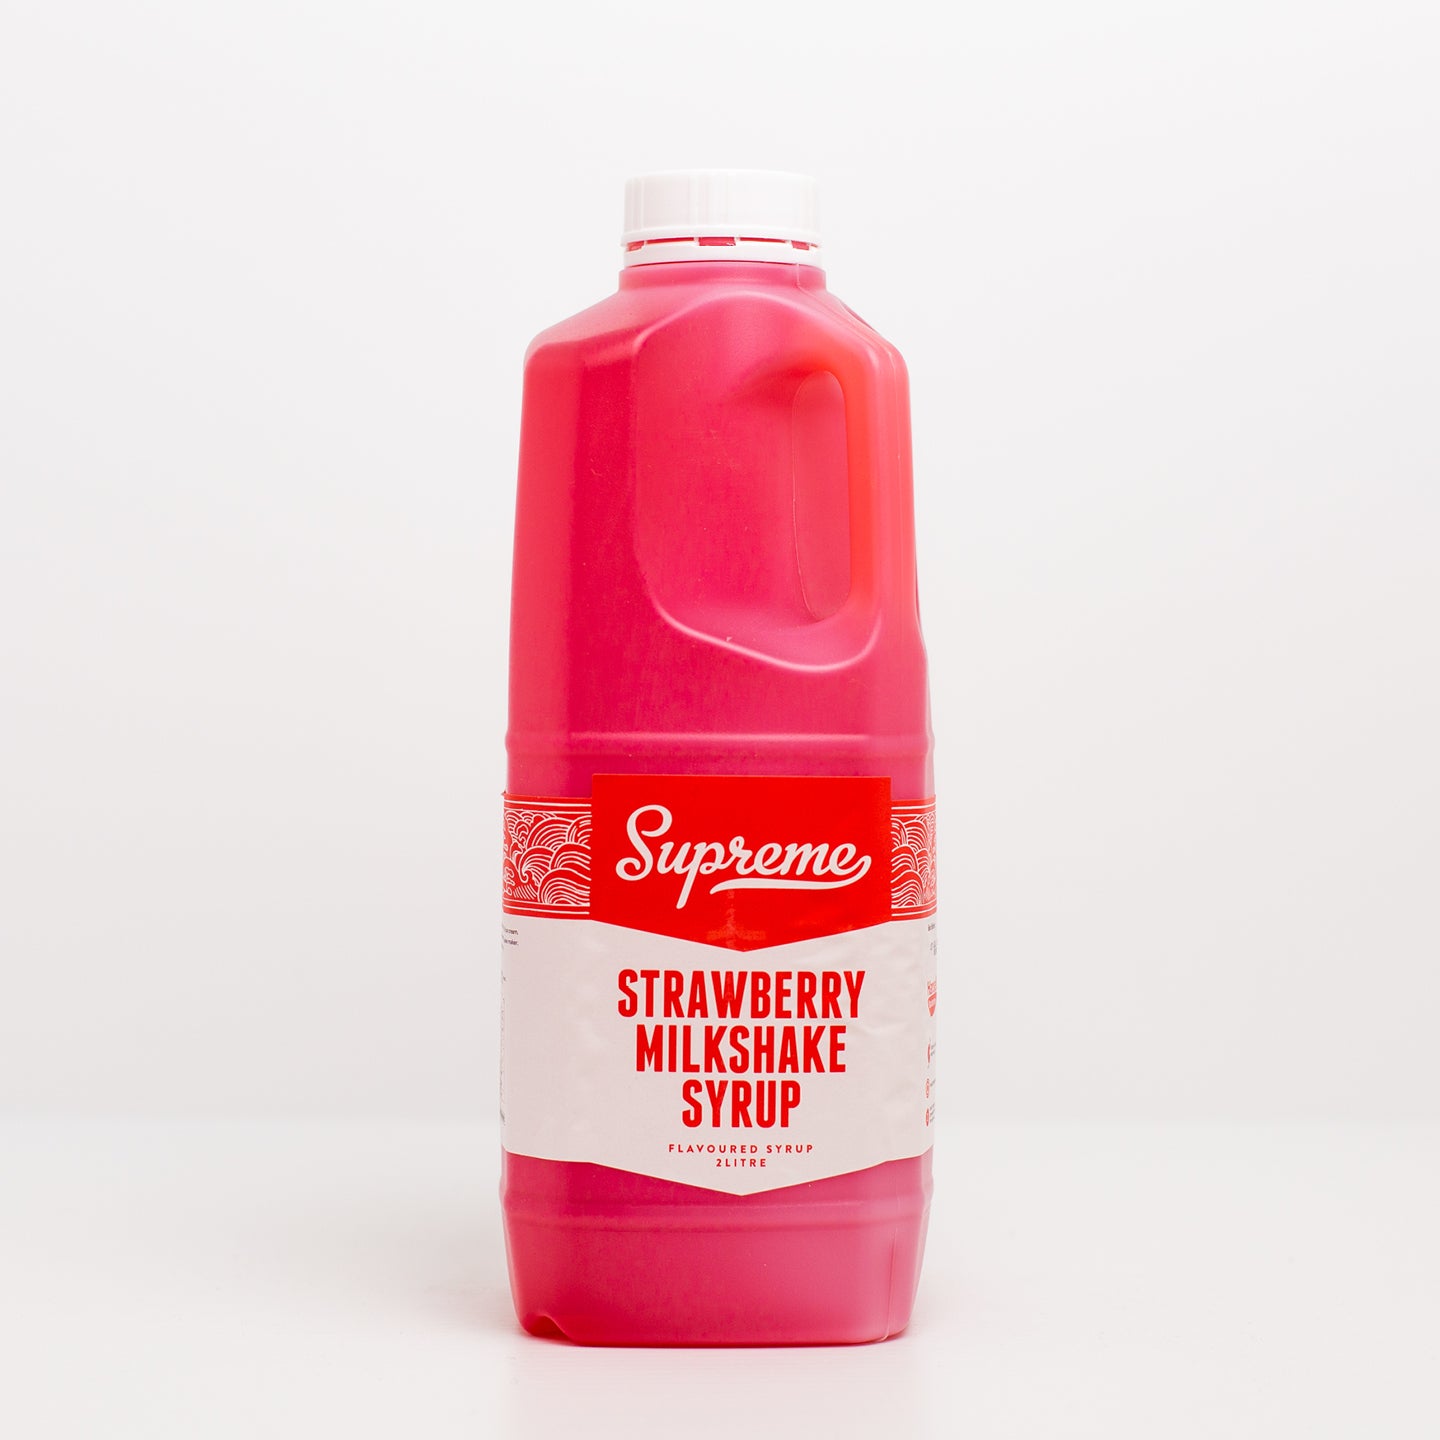 Supreme Milkshake Syrup 2L STRAWBERRY